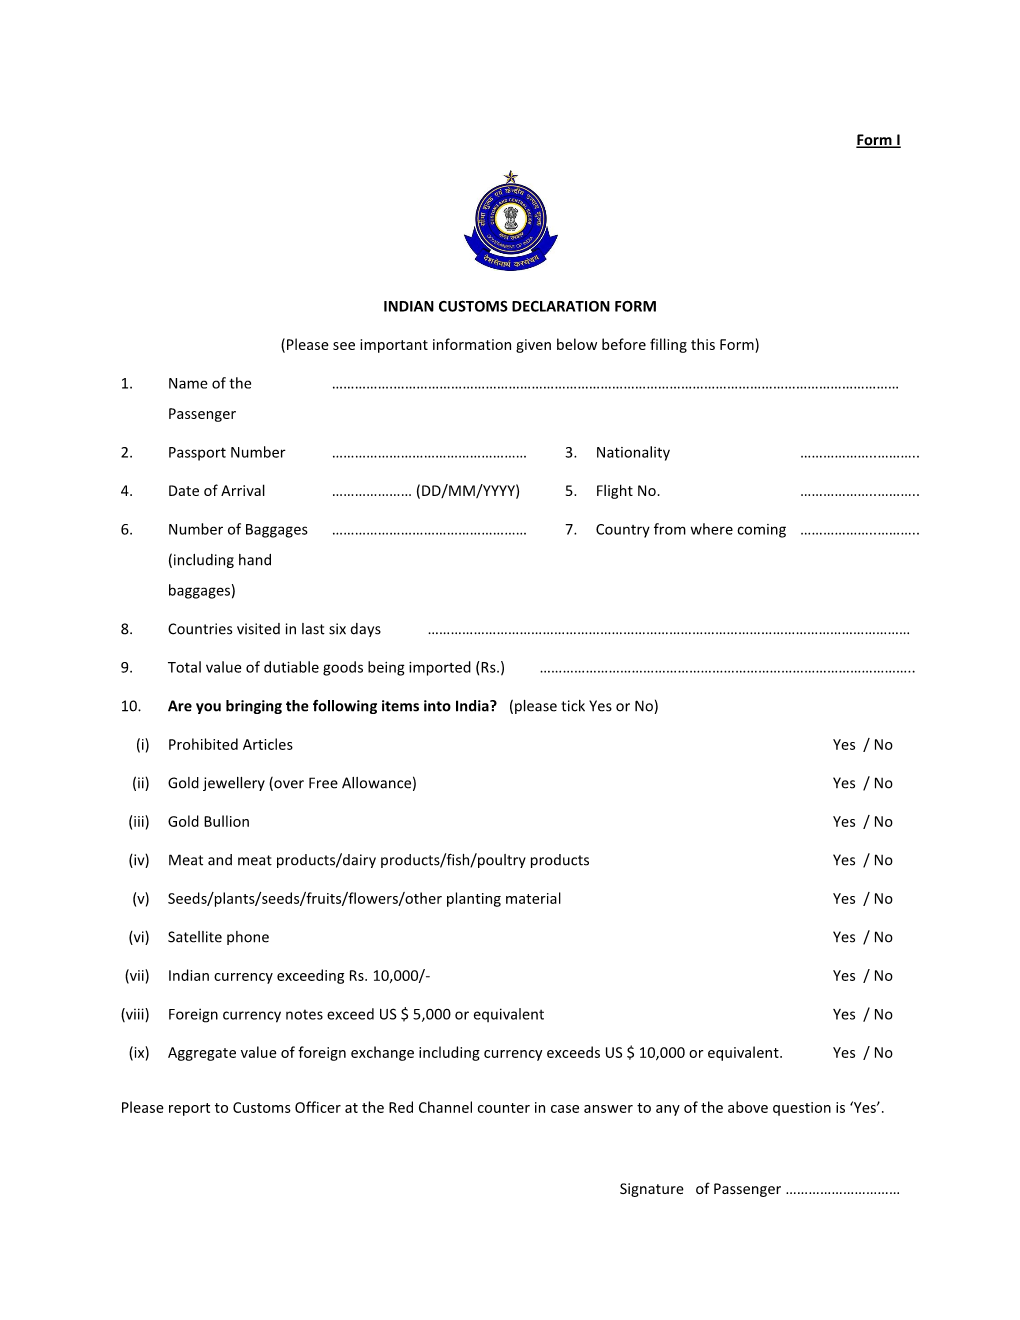 Form I INDIAN CUSTOMS DECLARATION FORM